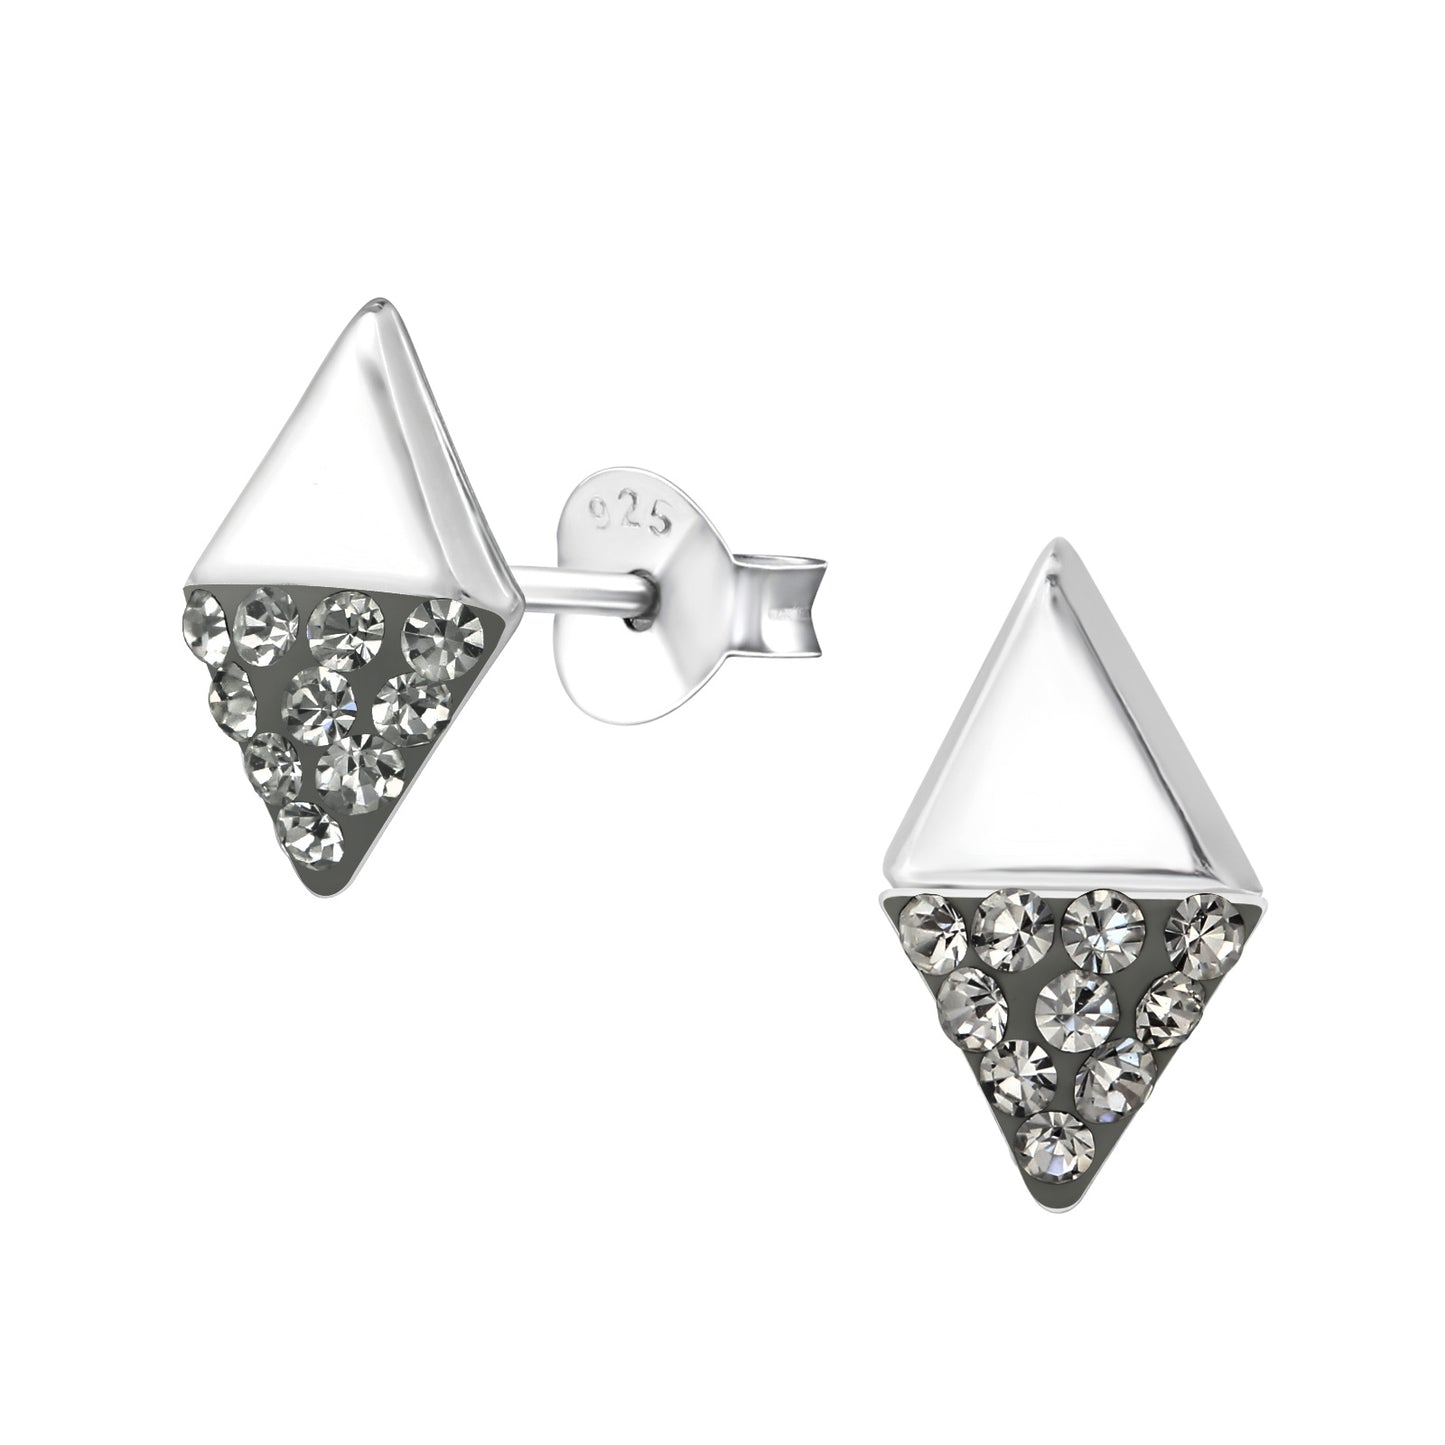 sterling silver earrings, sterling silver earrings for women, ladies sterling silver earrings, handmade jewellery, contemporary jewellery, silver studs 